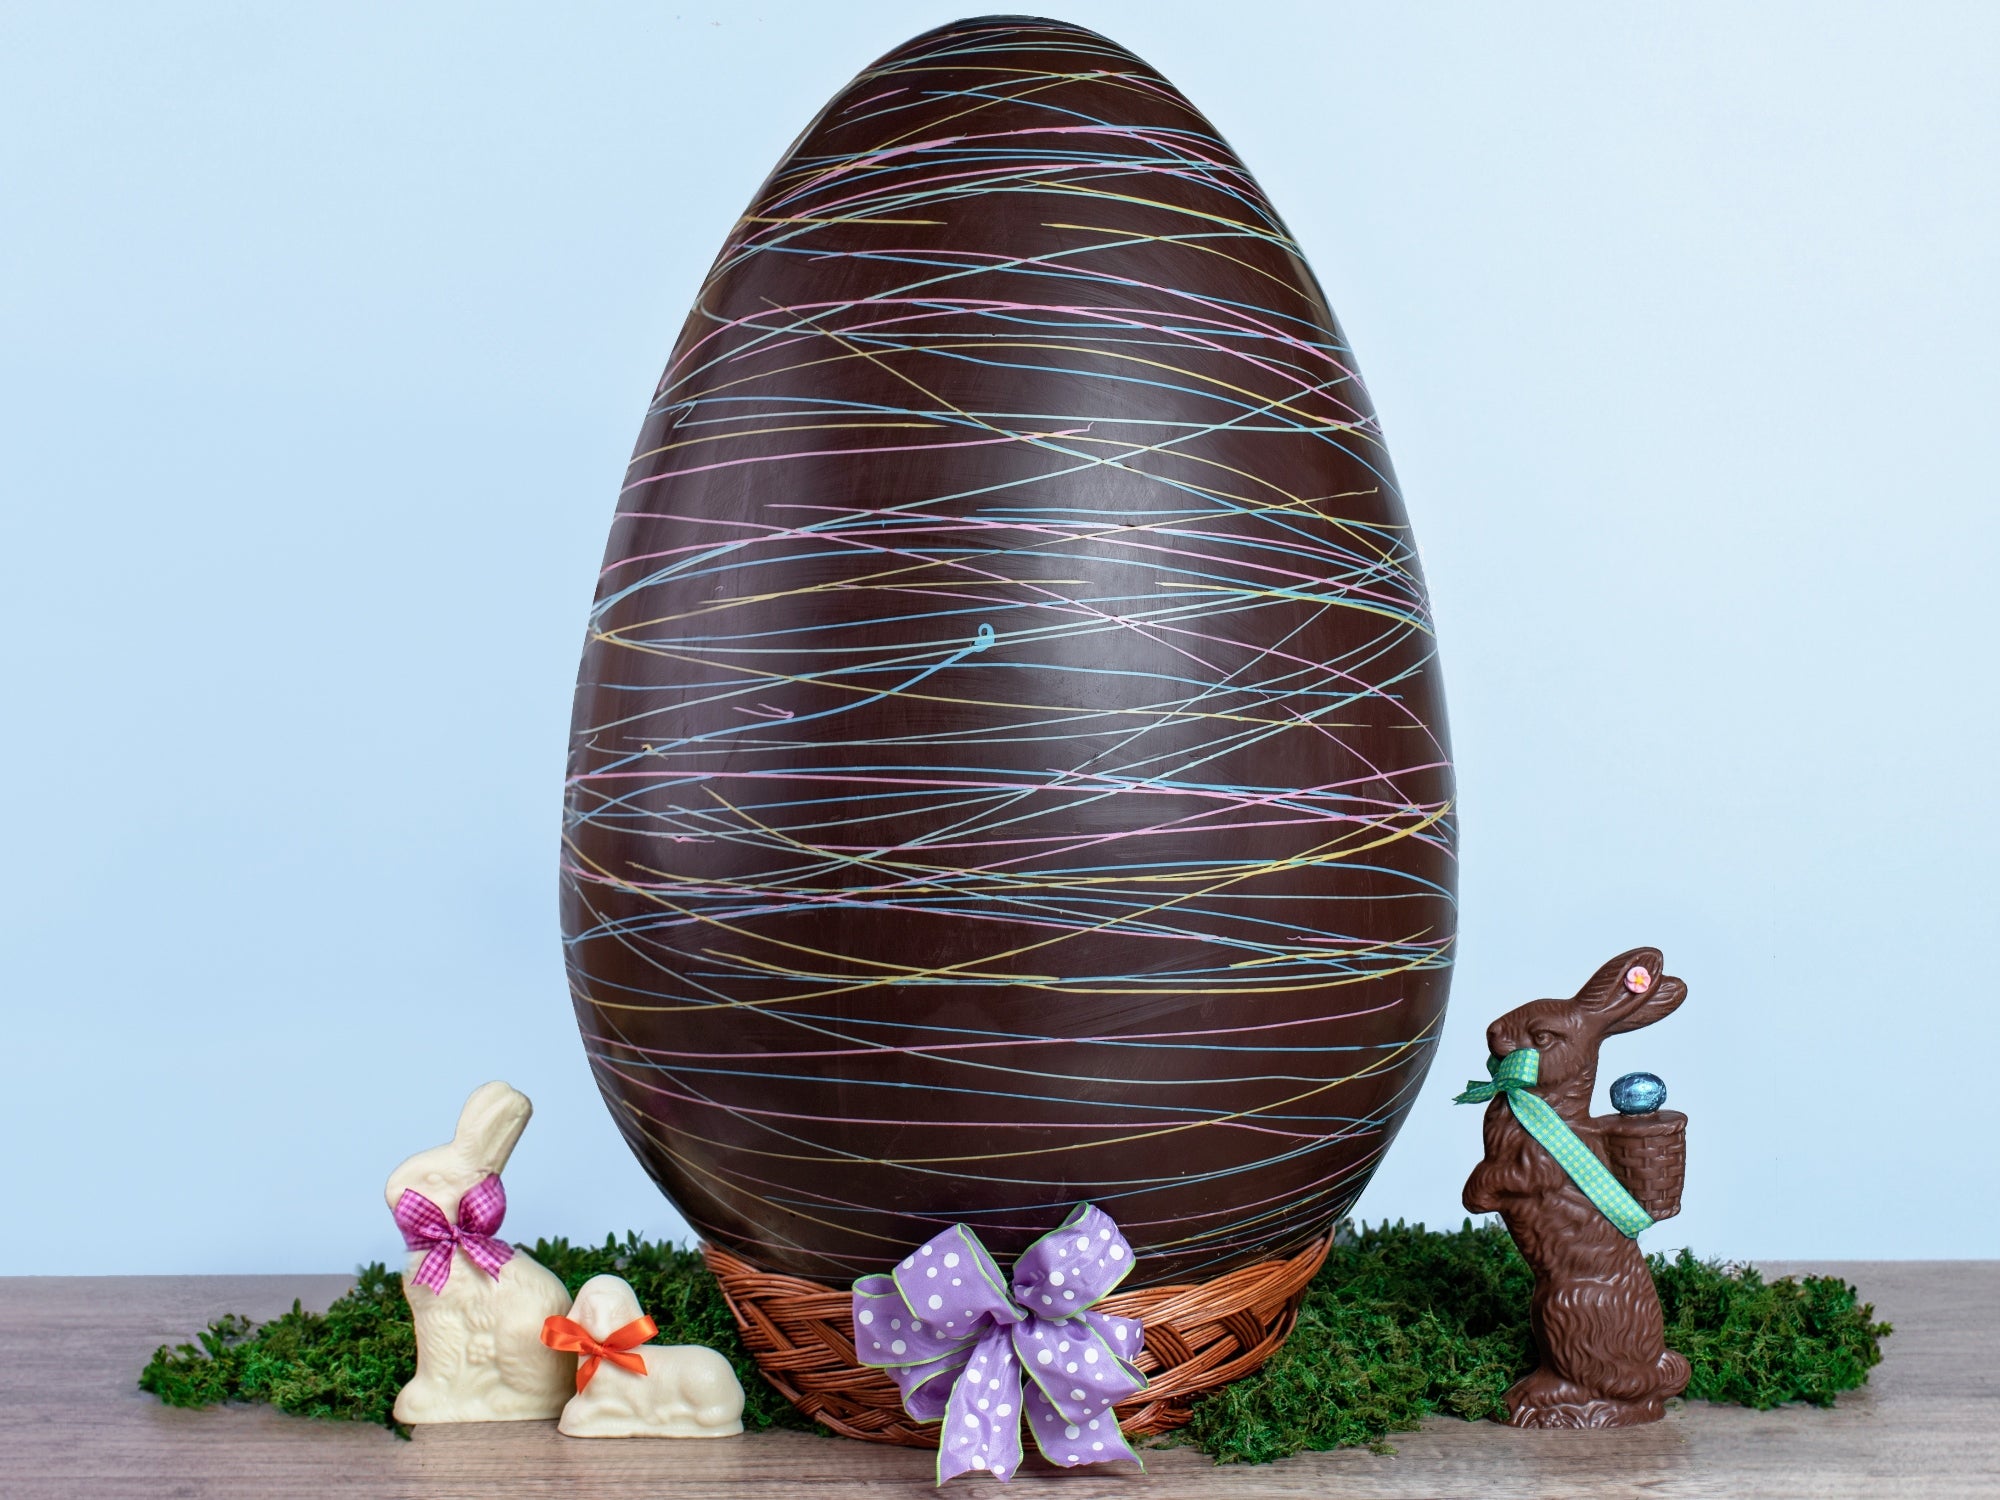 Giant Gourmet Chocolate Easter Egg